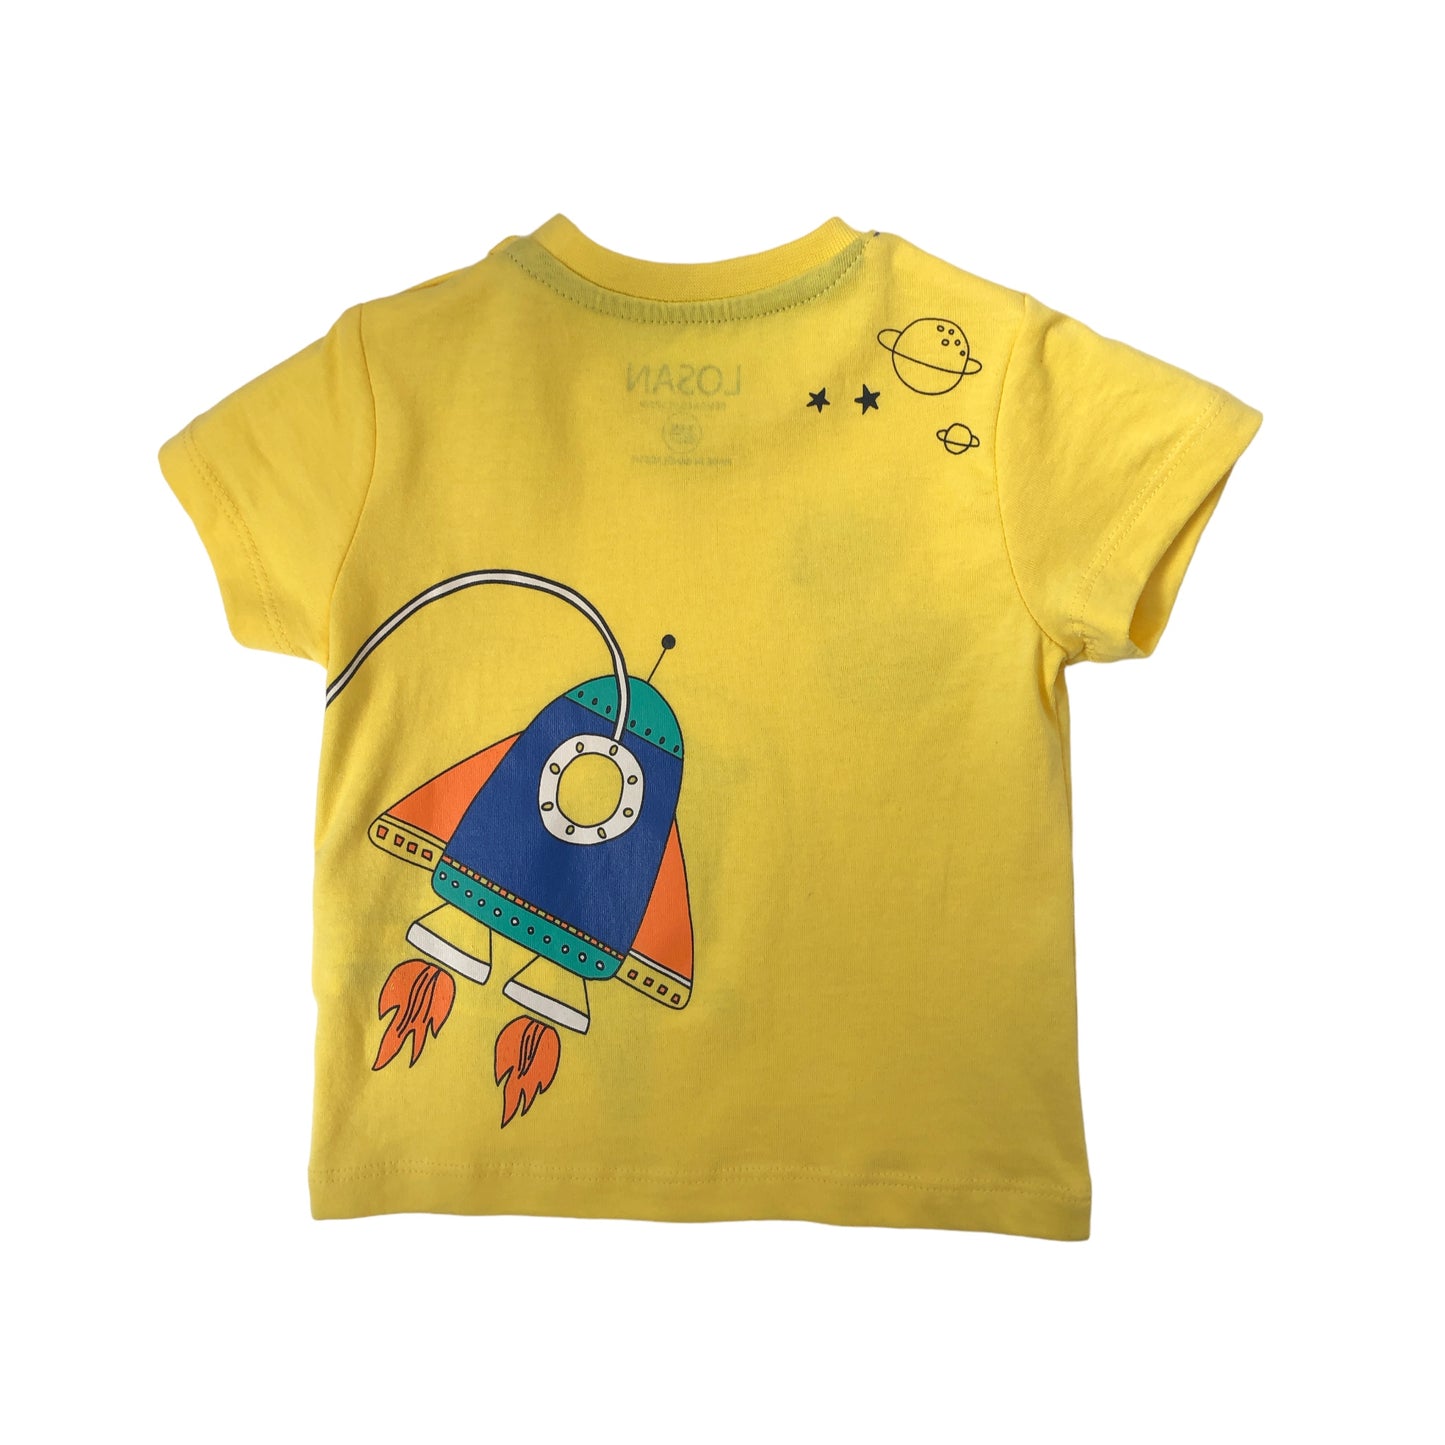 Playera amarilla manga corta “GET READY FOR SPACE TOUR” para bebé niño Losan